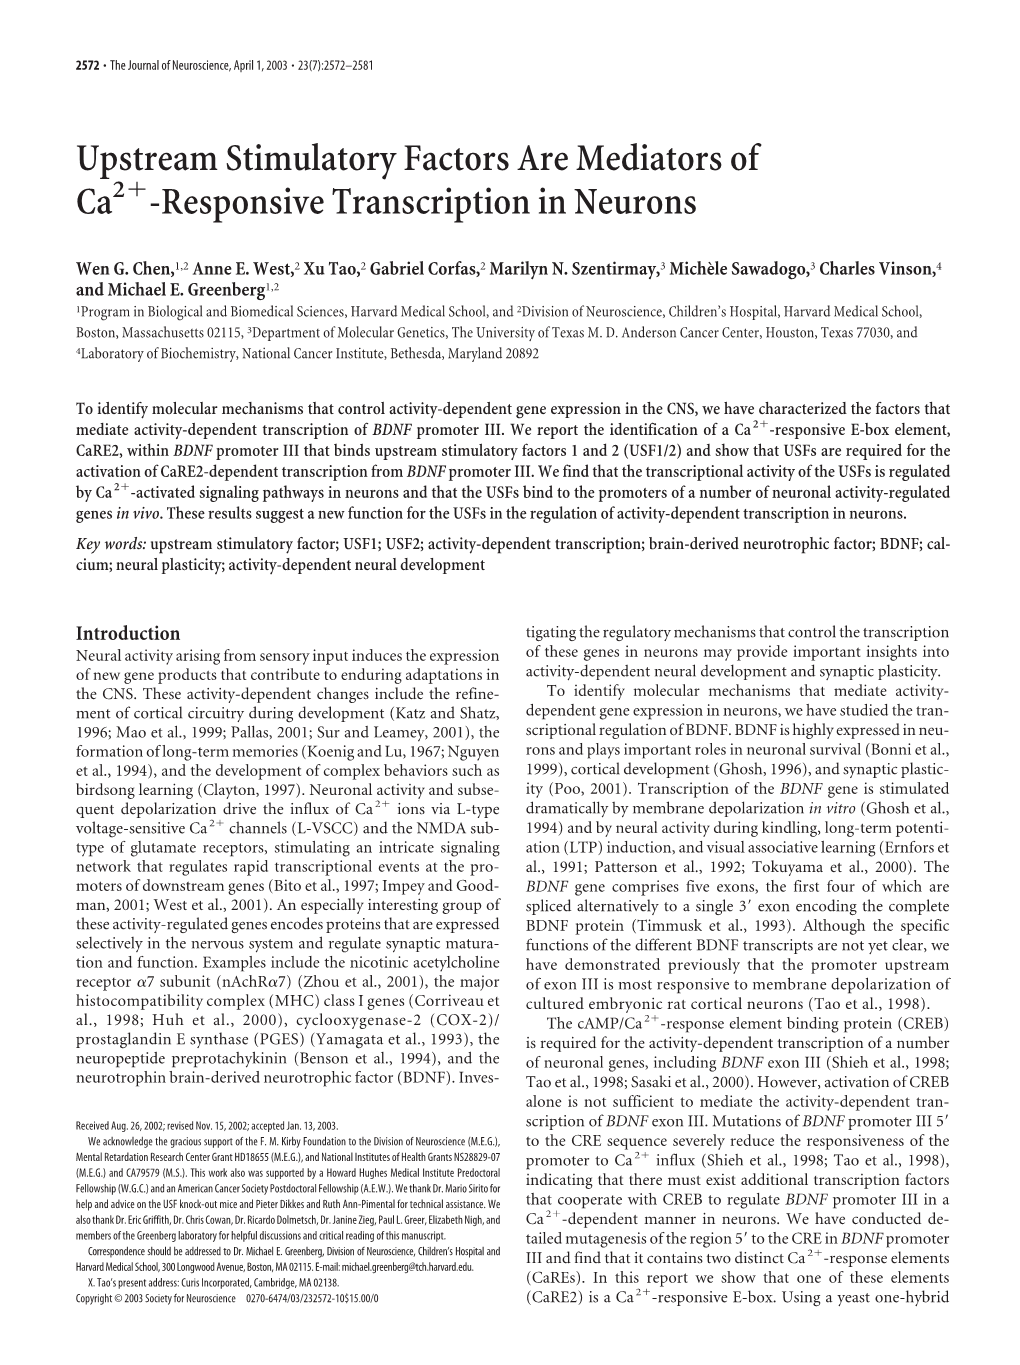 Responsive Transcription in Neurons